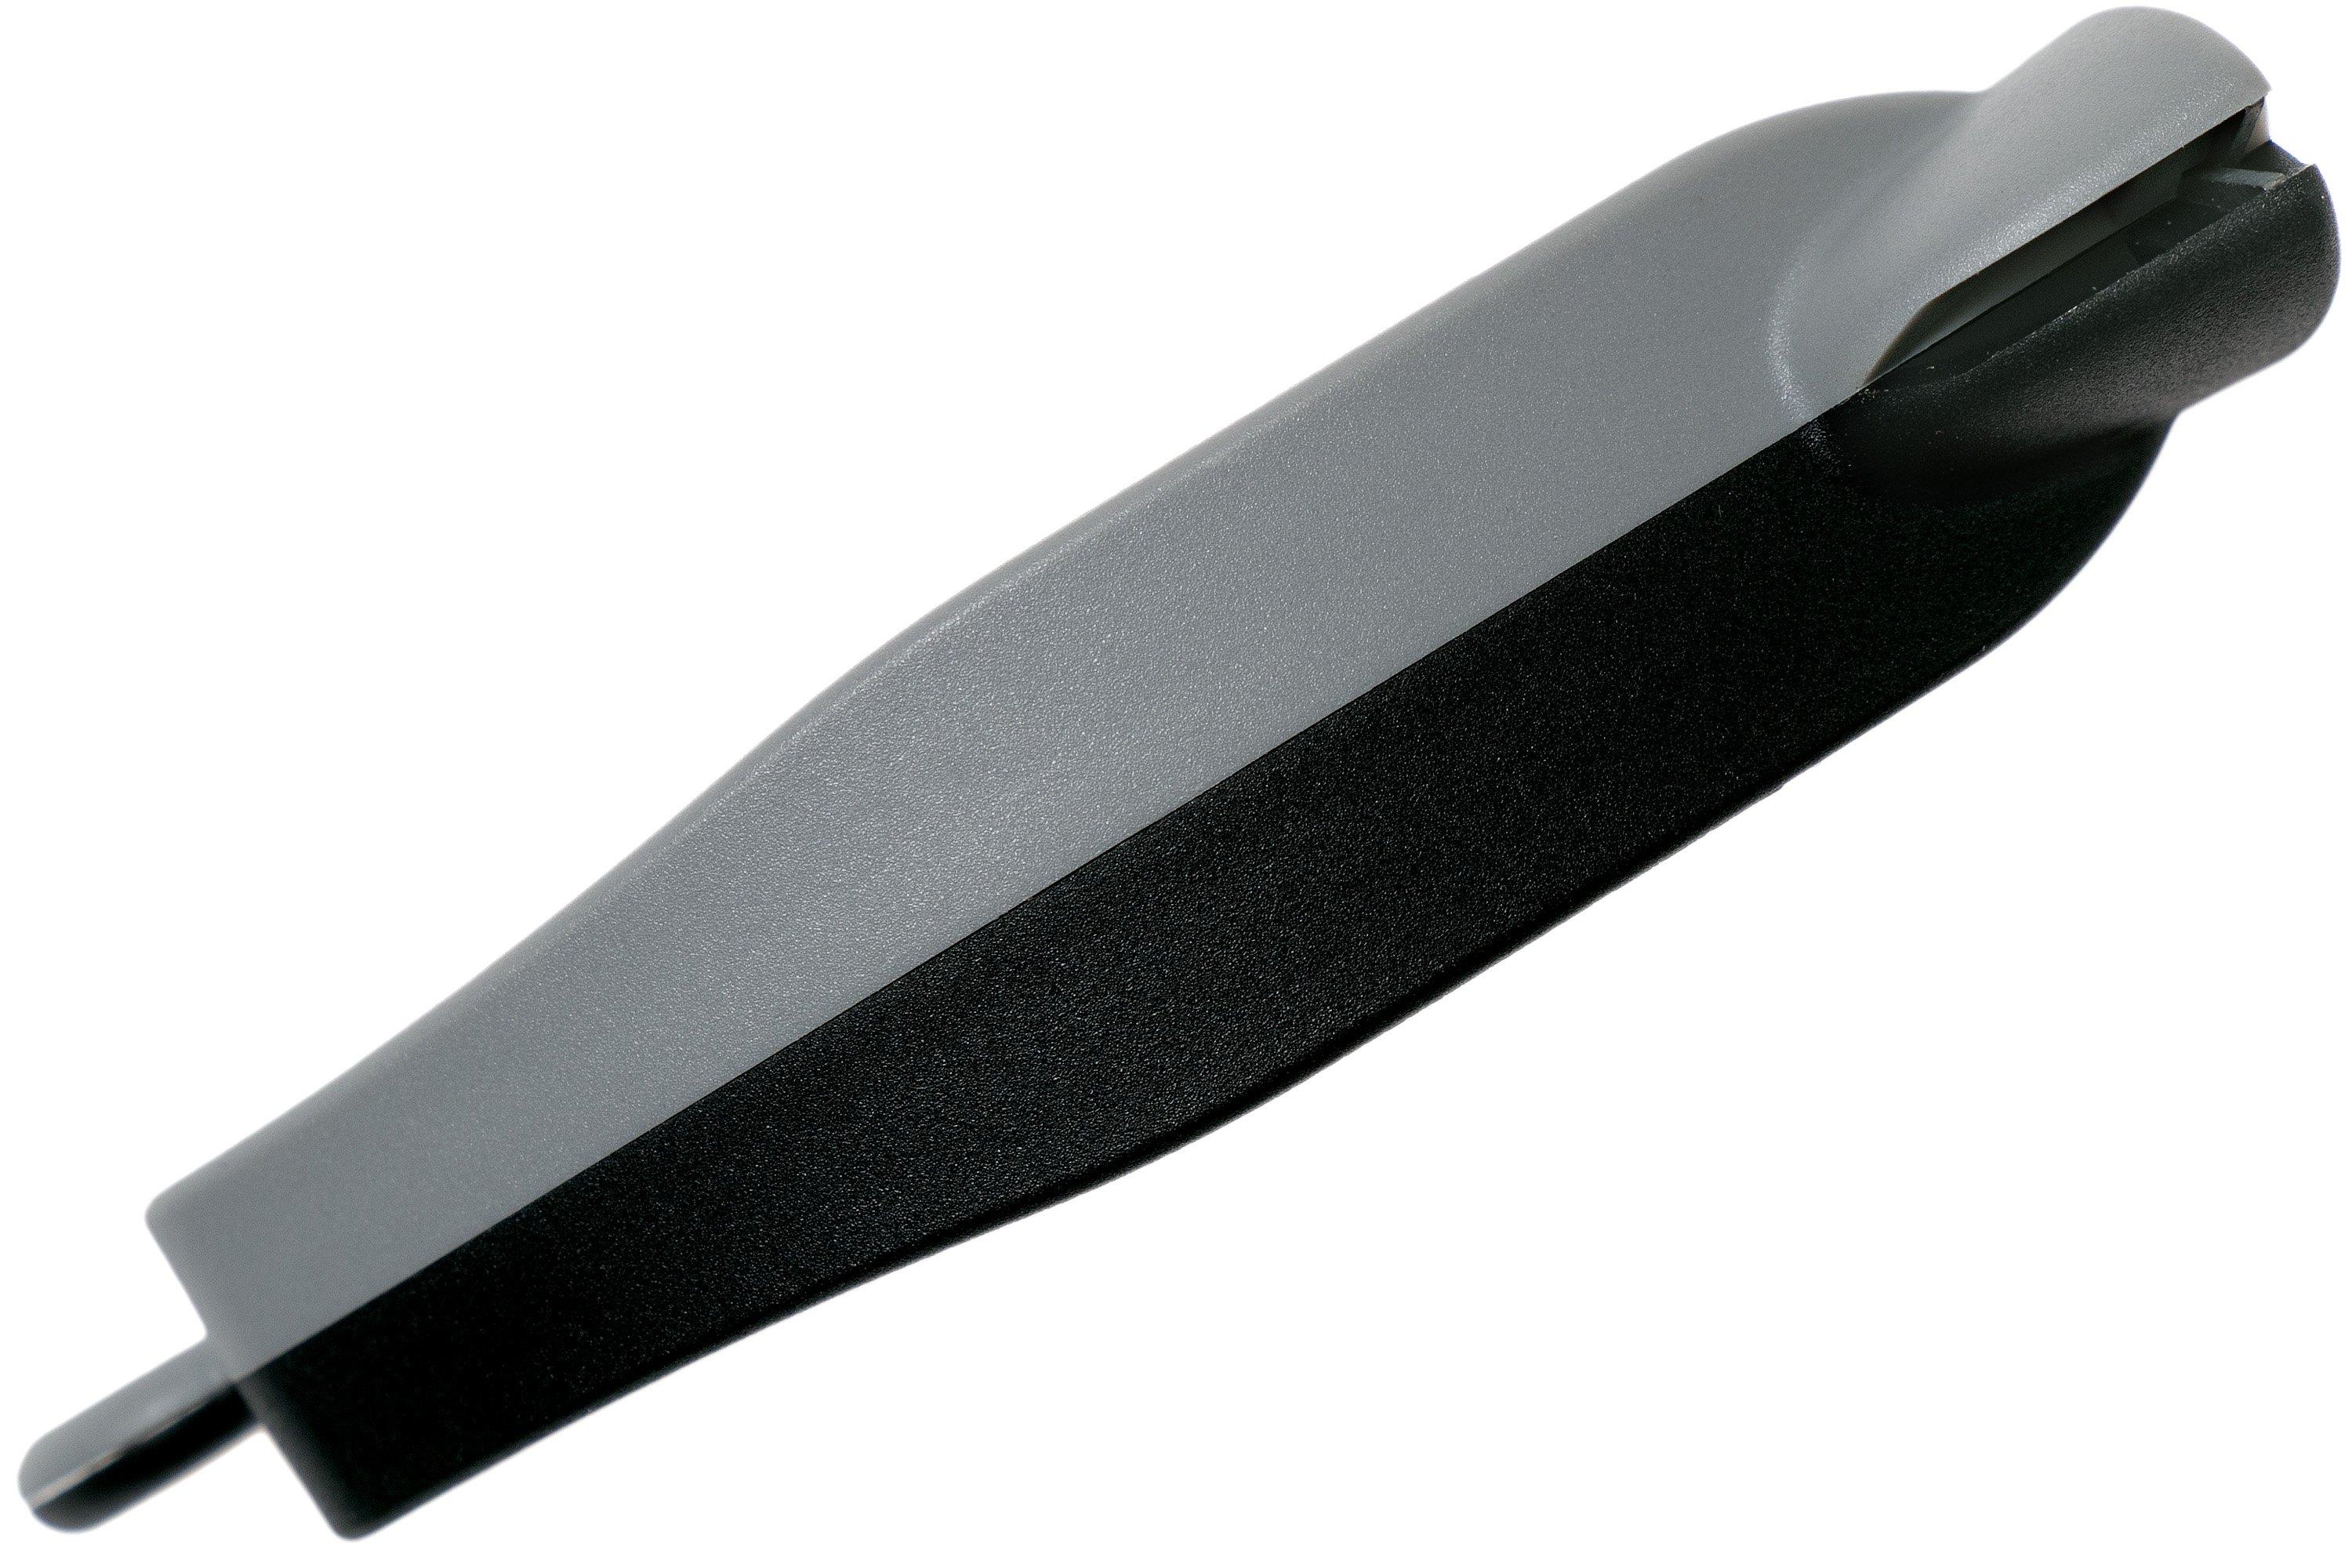 Victorinox Swiss Knife Sharpener Sharpy 7.8715 For 15cm Or More